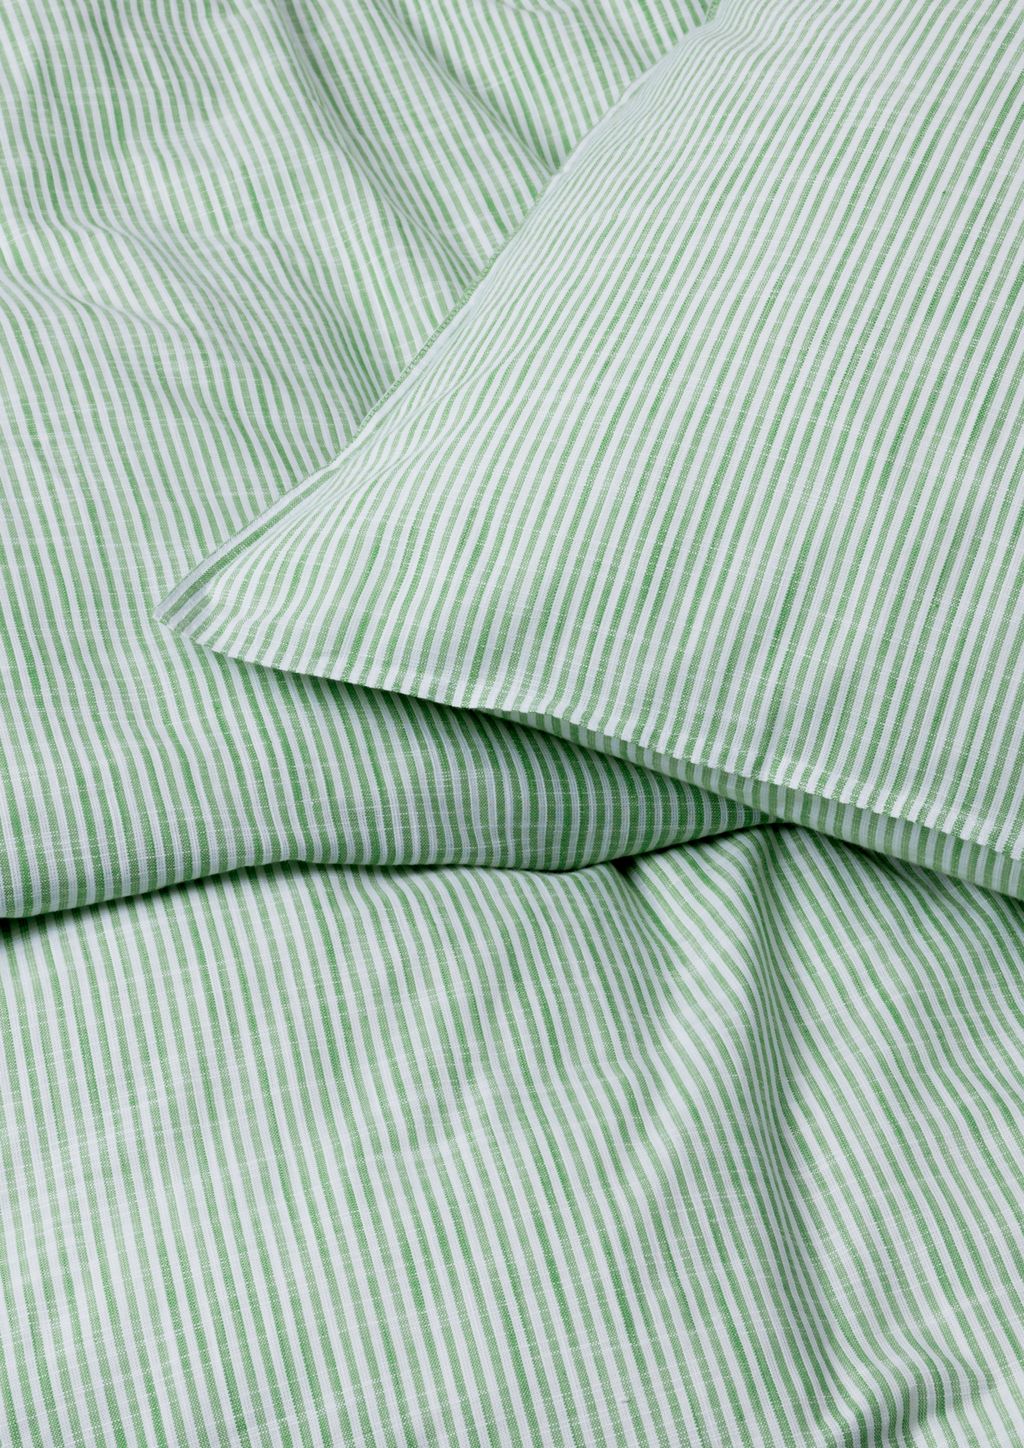 Juna Monochrome Lines Lož ložnice 200 x220 cm, zelená/bílá